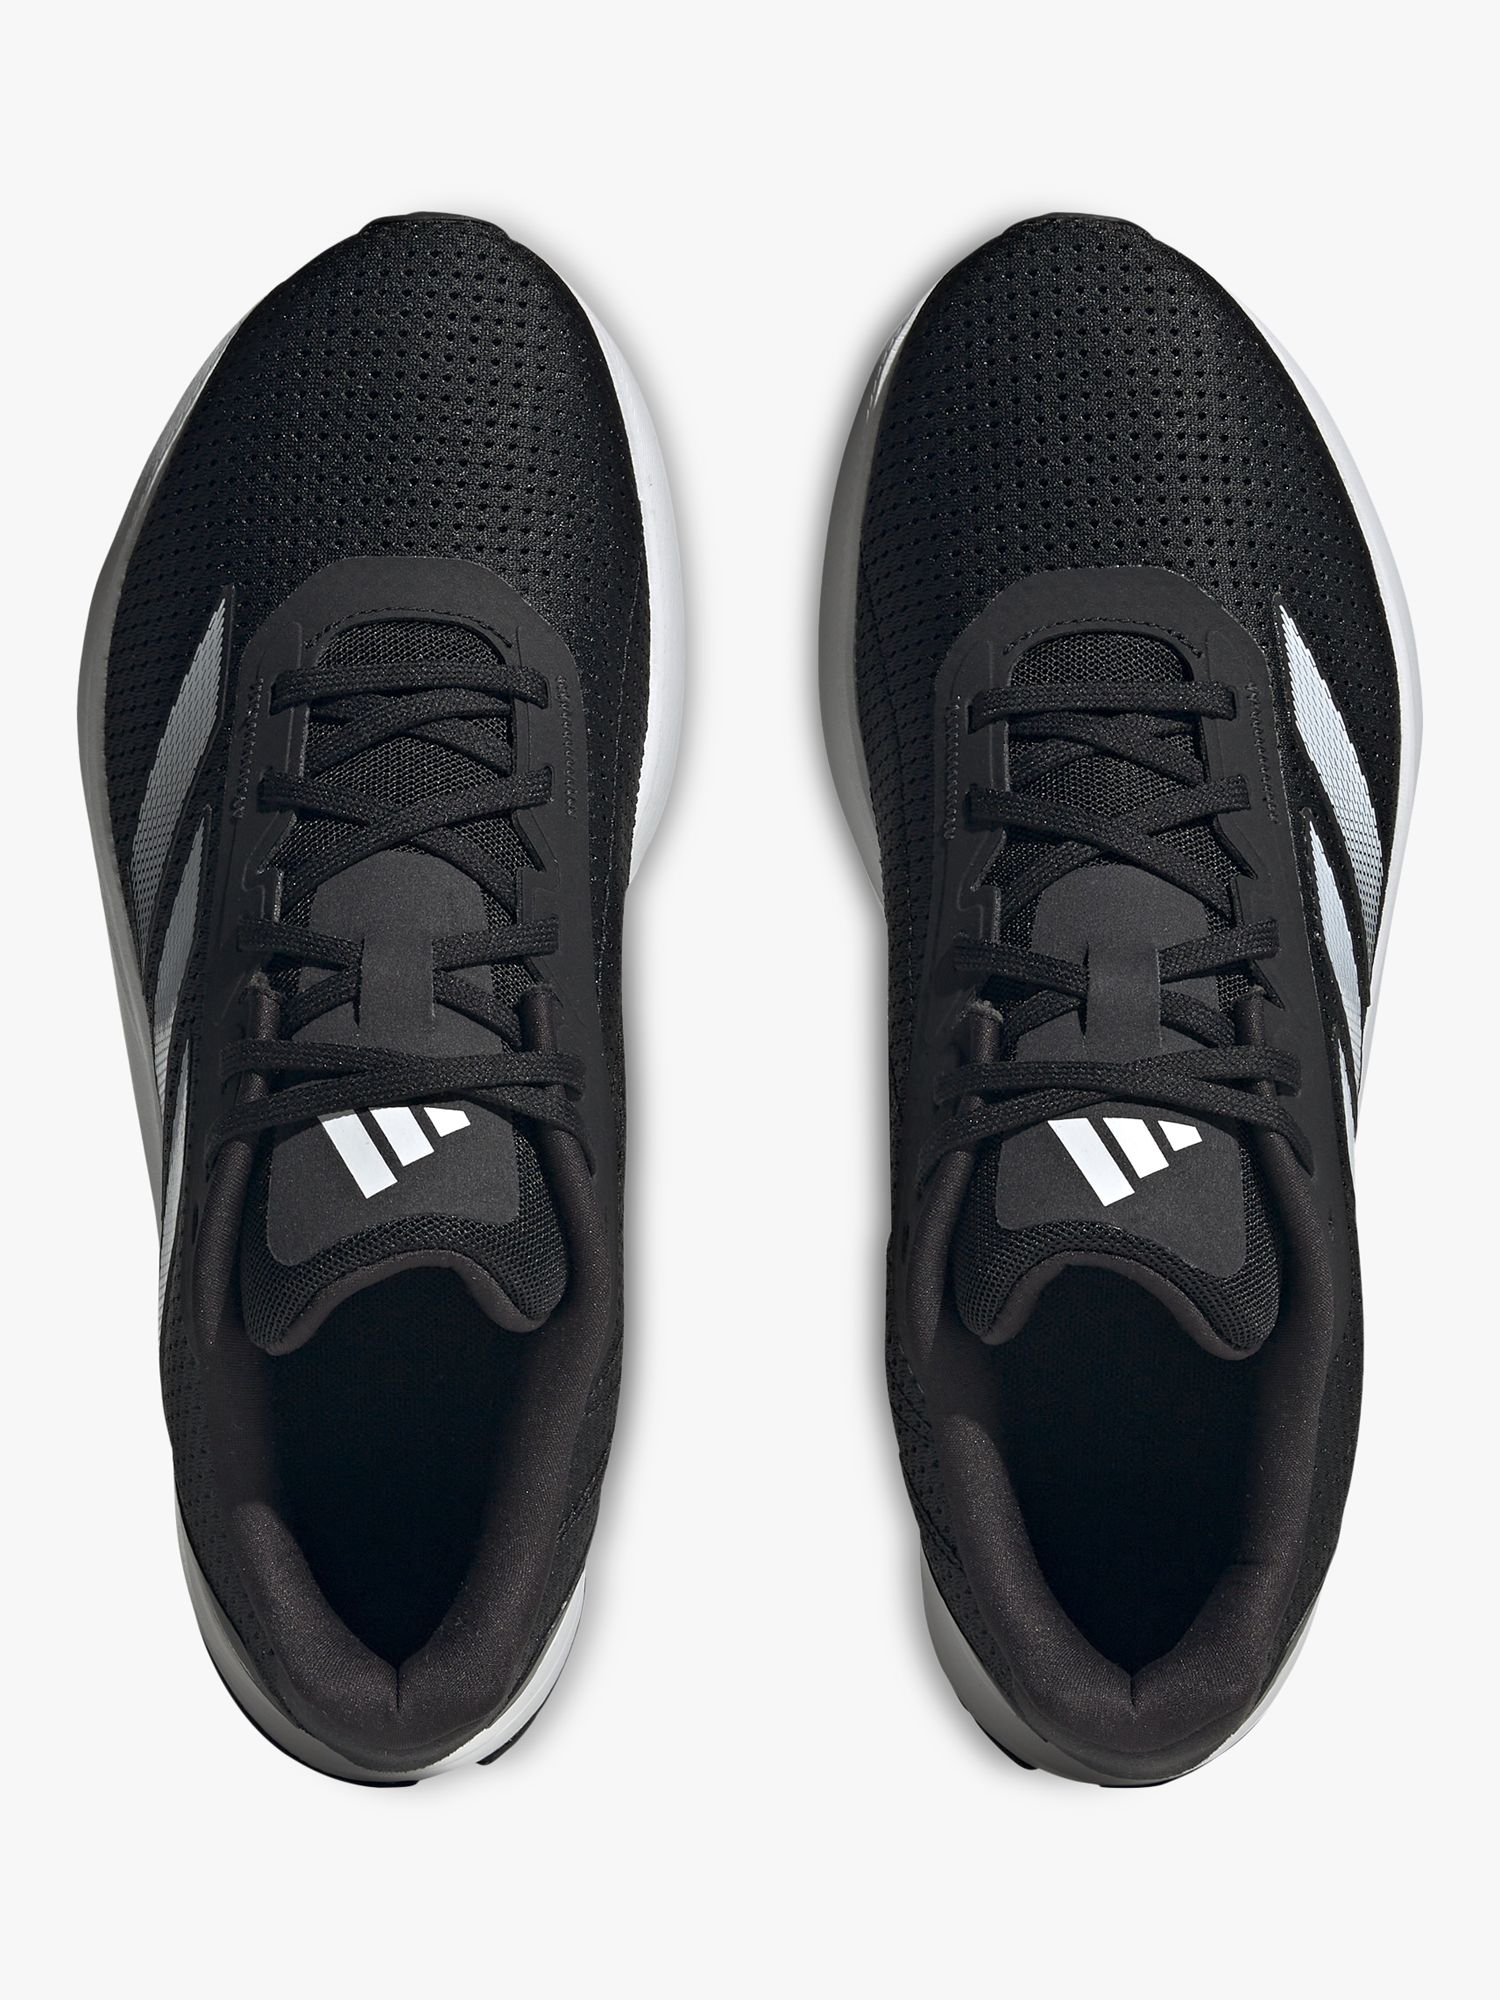 adidas Duramo SL Trainers, Black/White/Carbon, 9